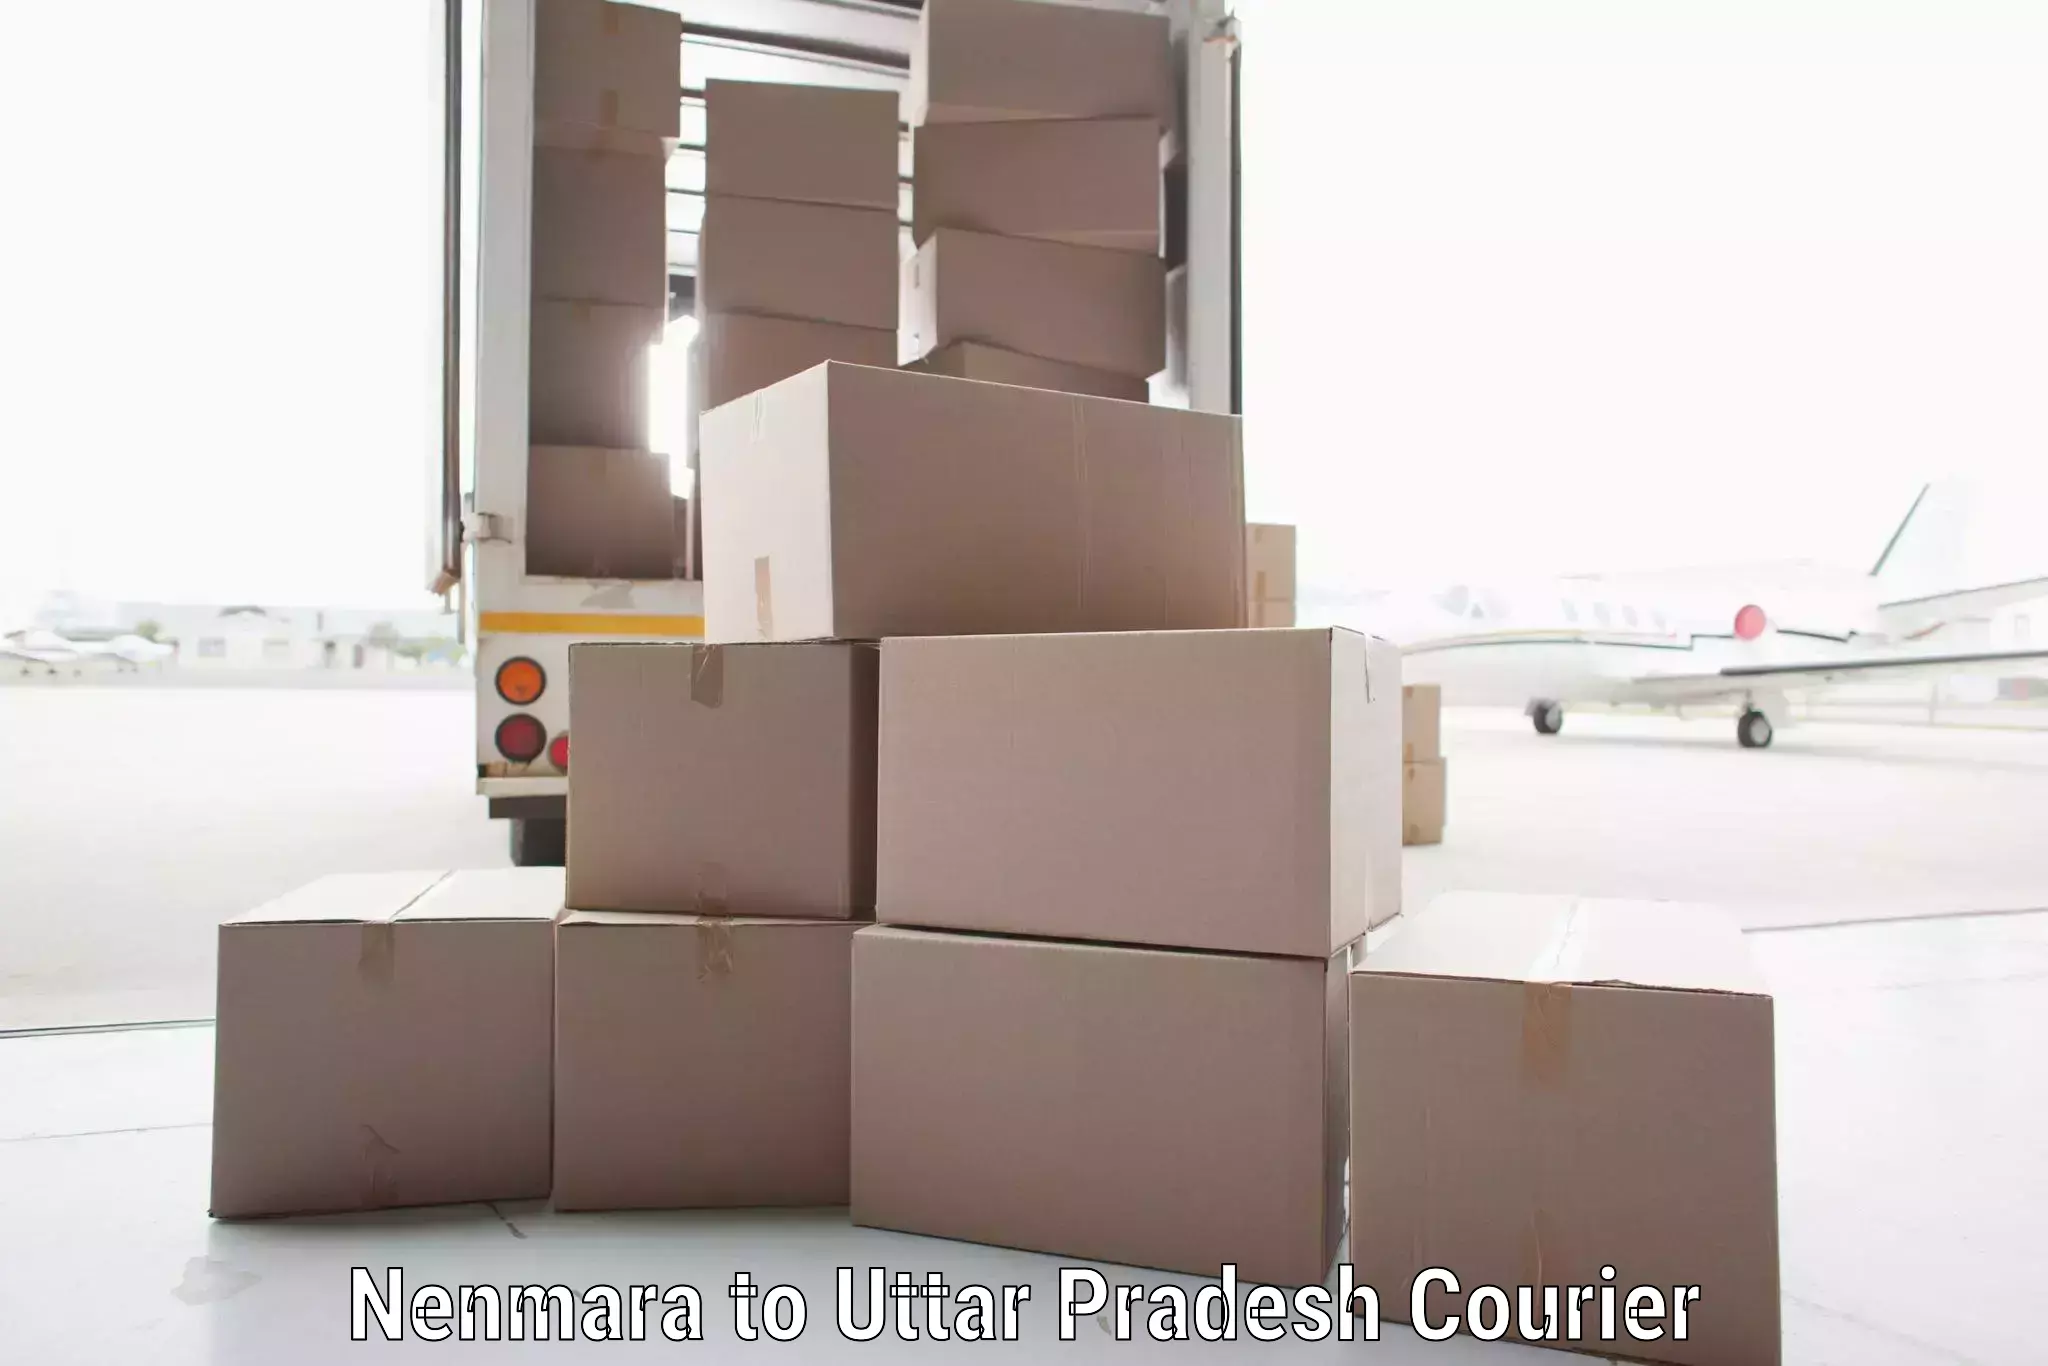 State-of-the-art courier technology Nenmara to Vrindavan